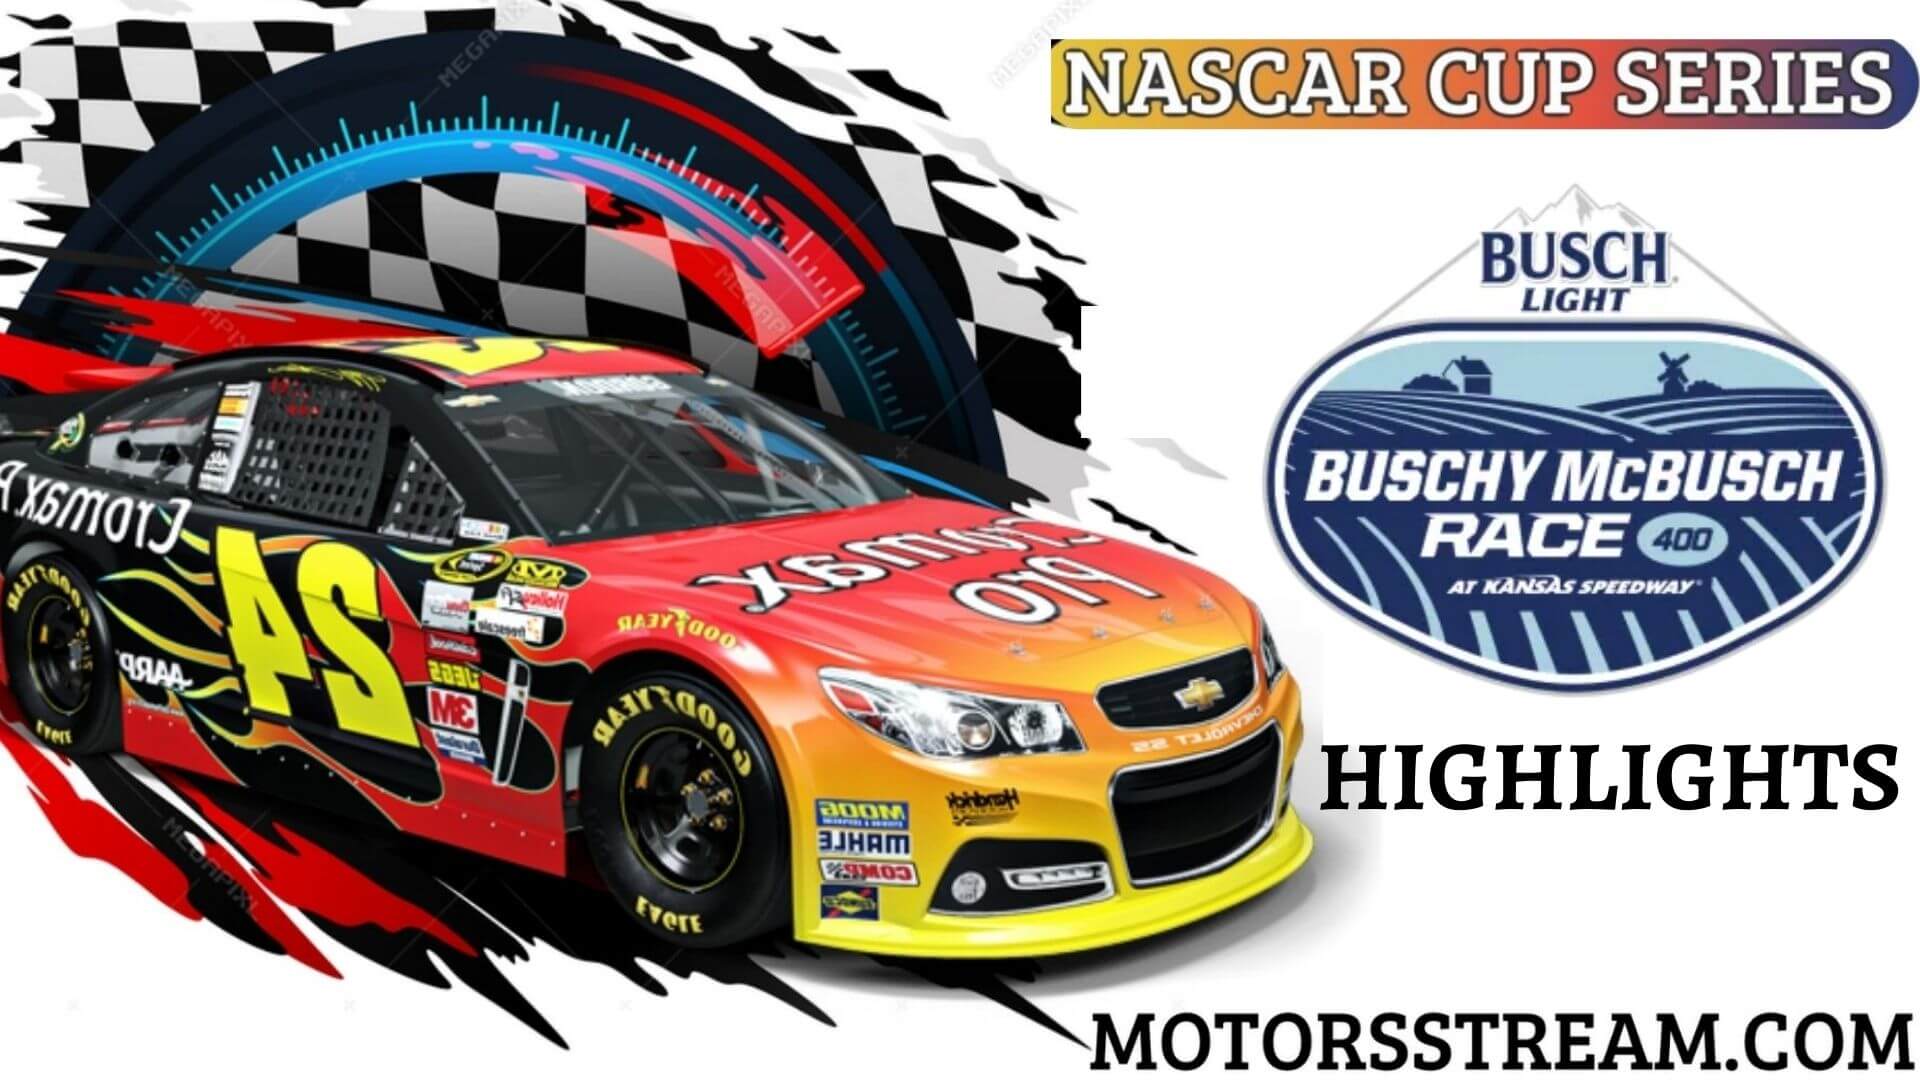 NASCAR Buschy Mcbusch Race 400 Highlights 2021 Cup Series